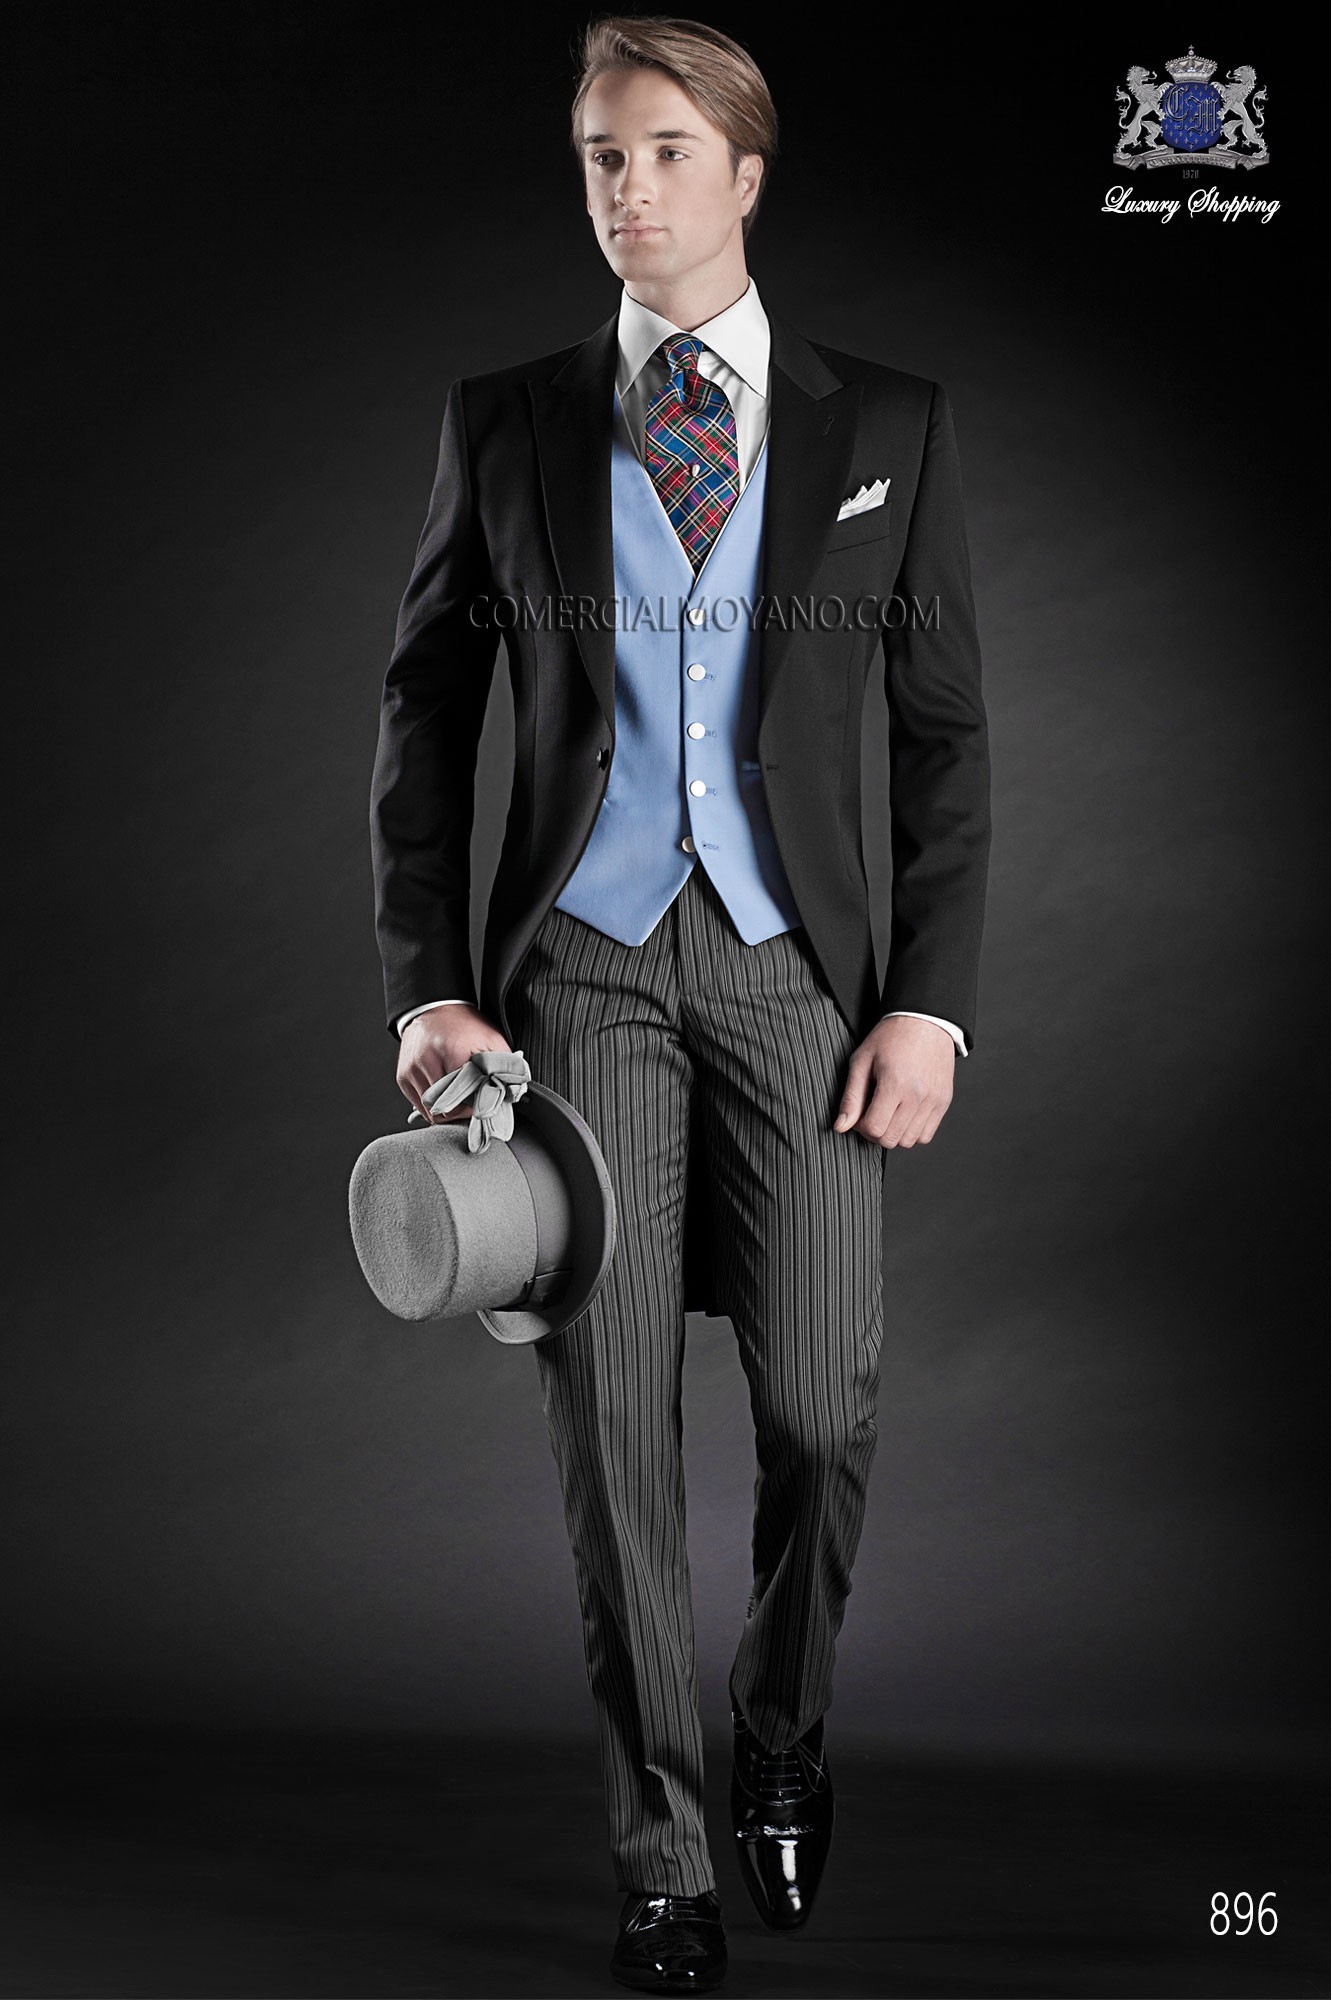 Gentleman black men wedding suit model 896 Mario Moyano